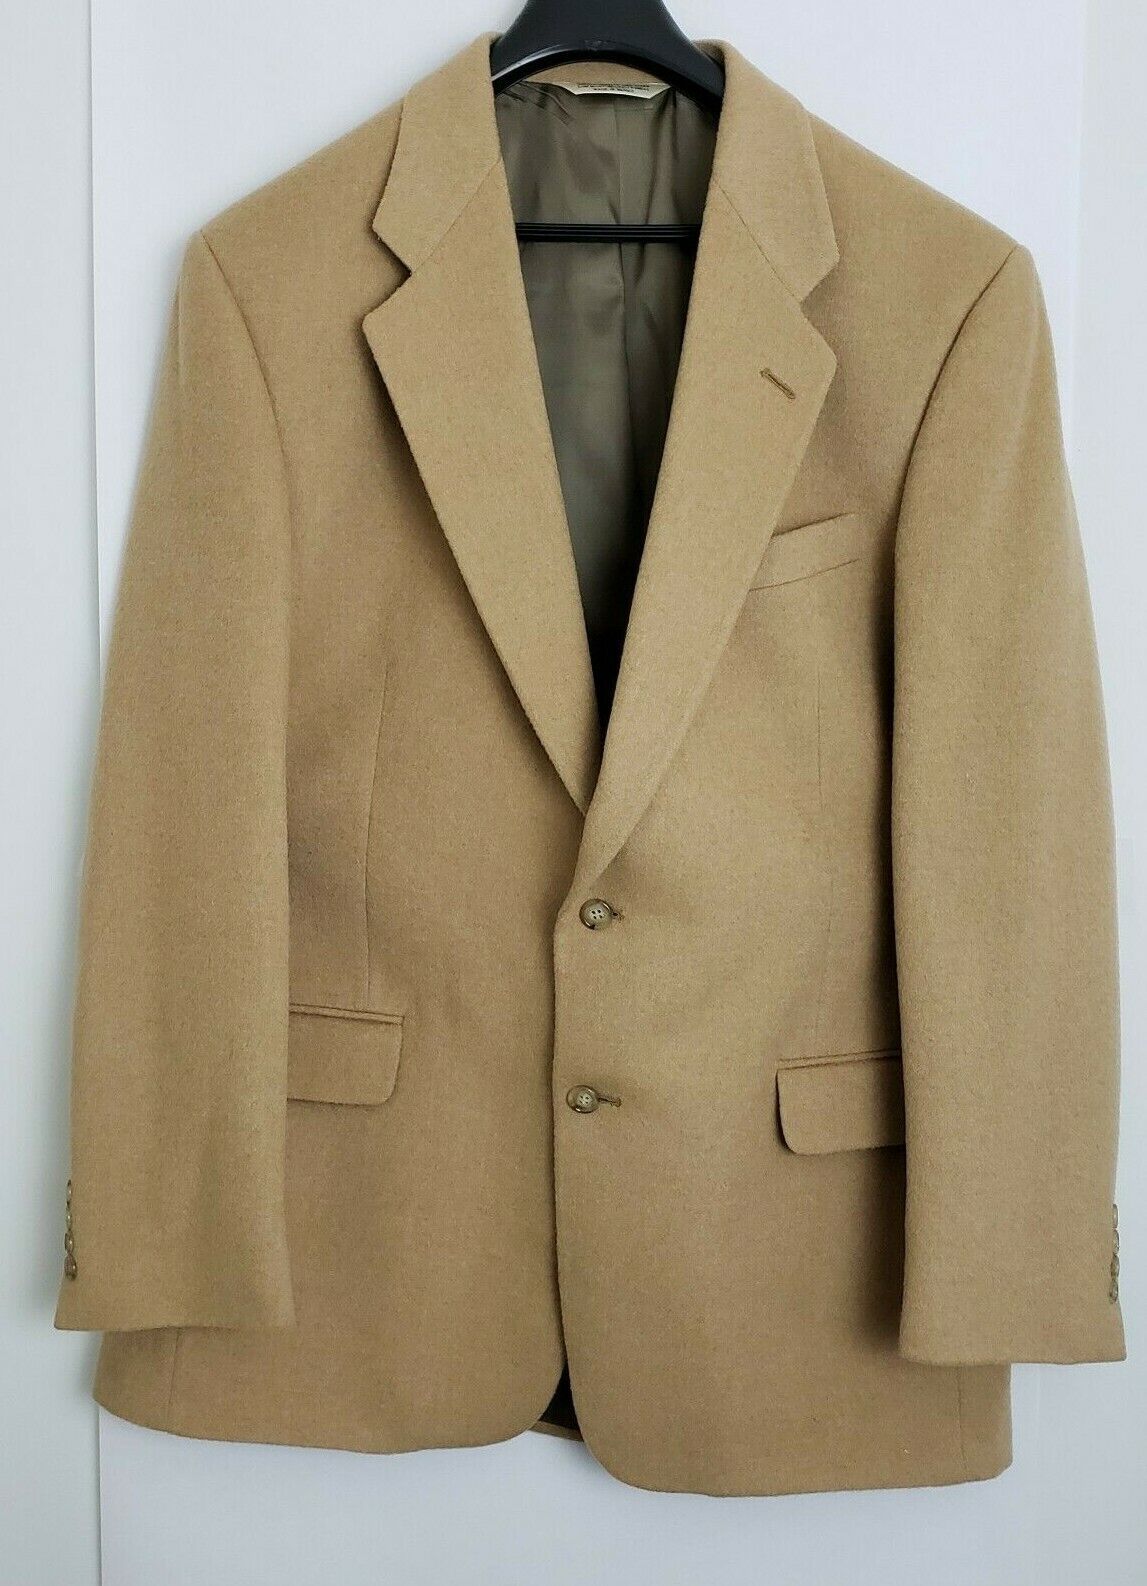 Evan Picone Mens Blazer Jacket Tan Lining 100% Camel Hair Button Size 42L - $89.05